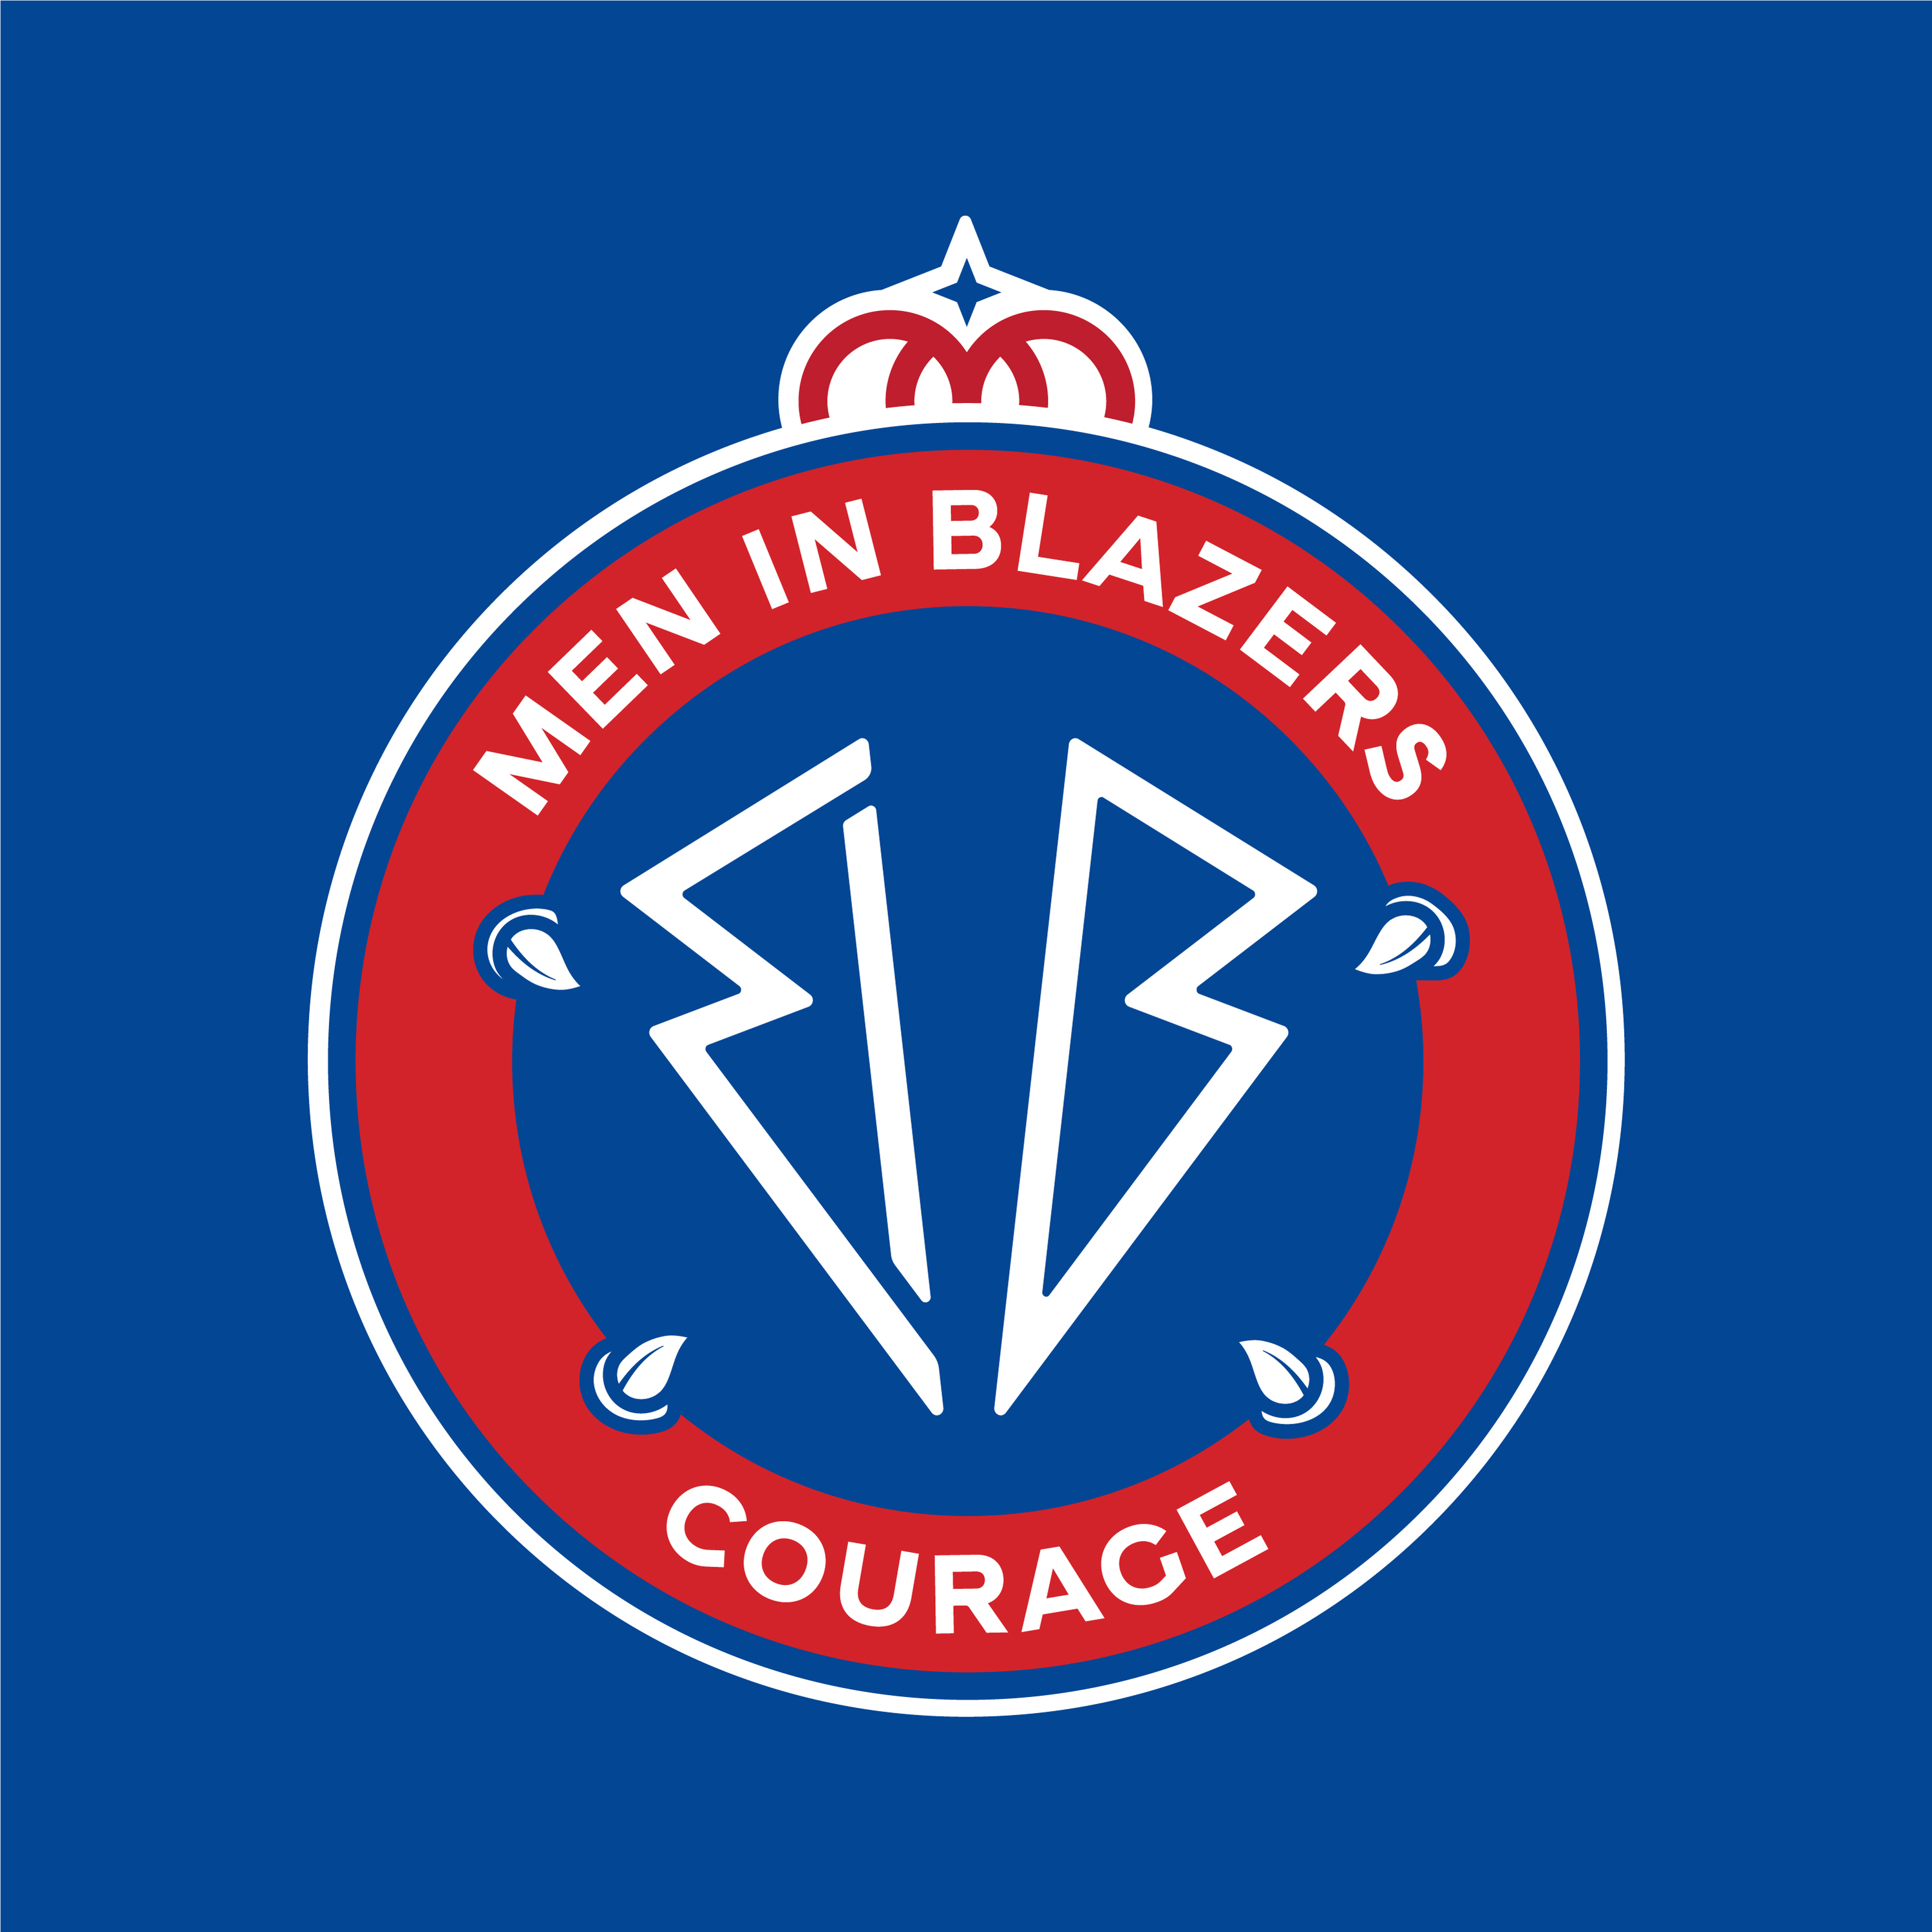 Men in Blazers World Cup Preview, Presented by Camarena Tequlia: Episode 5